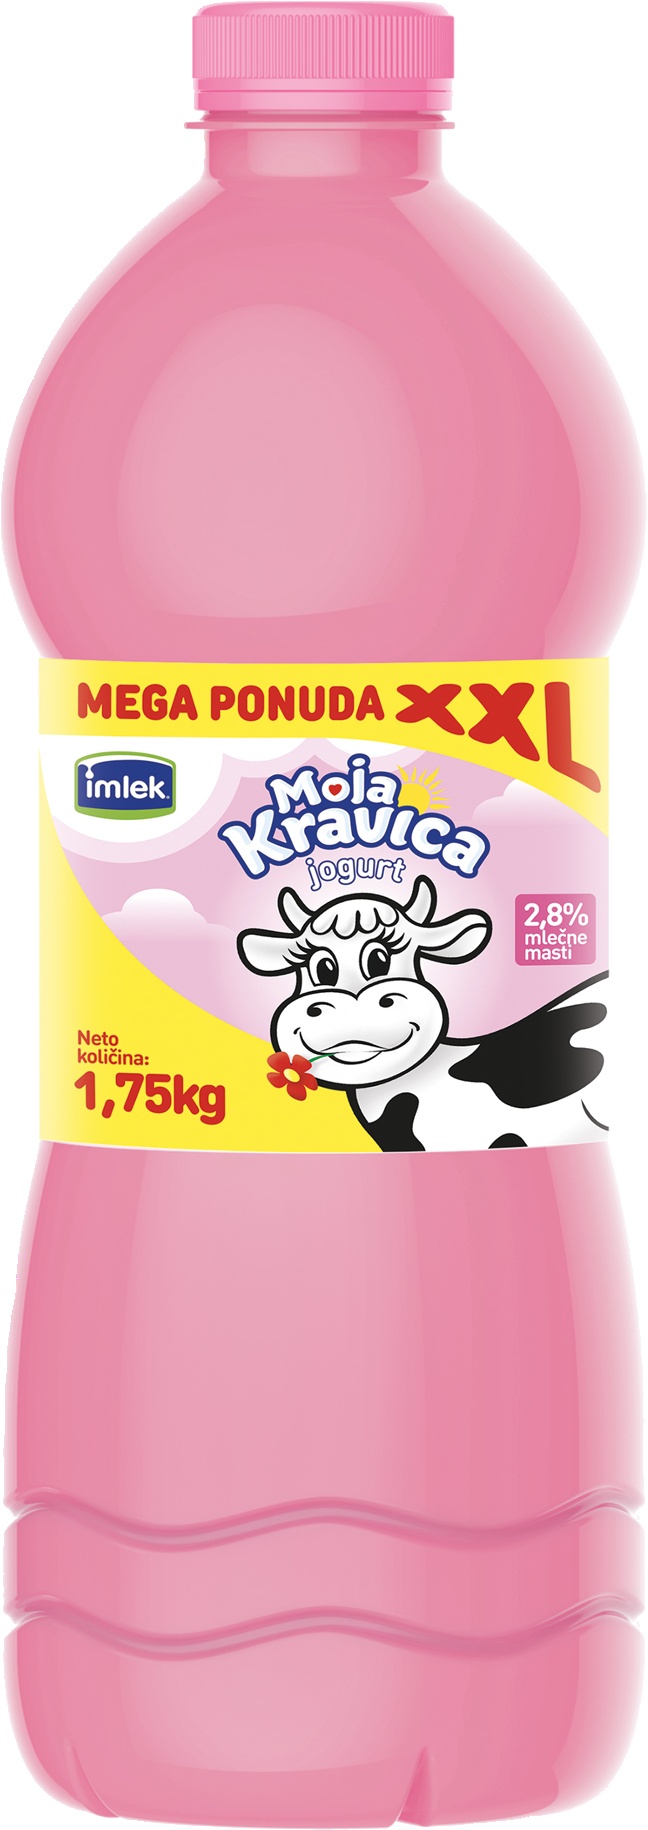 Slika za Jogurt XXL Moja Kravica 1.75kg